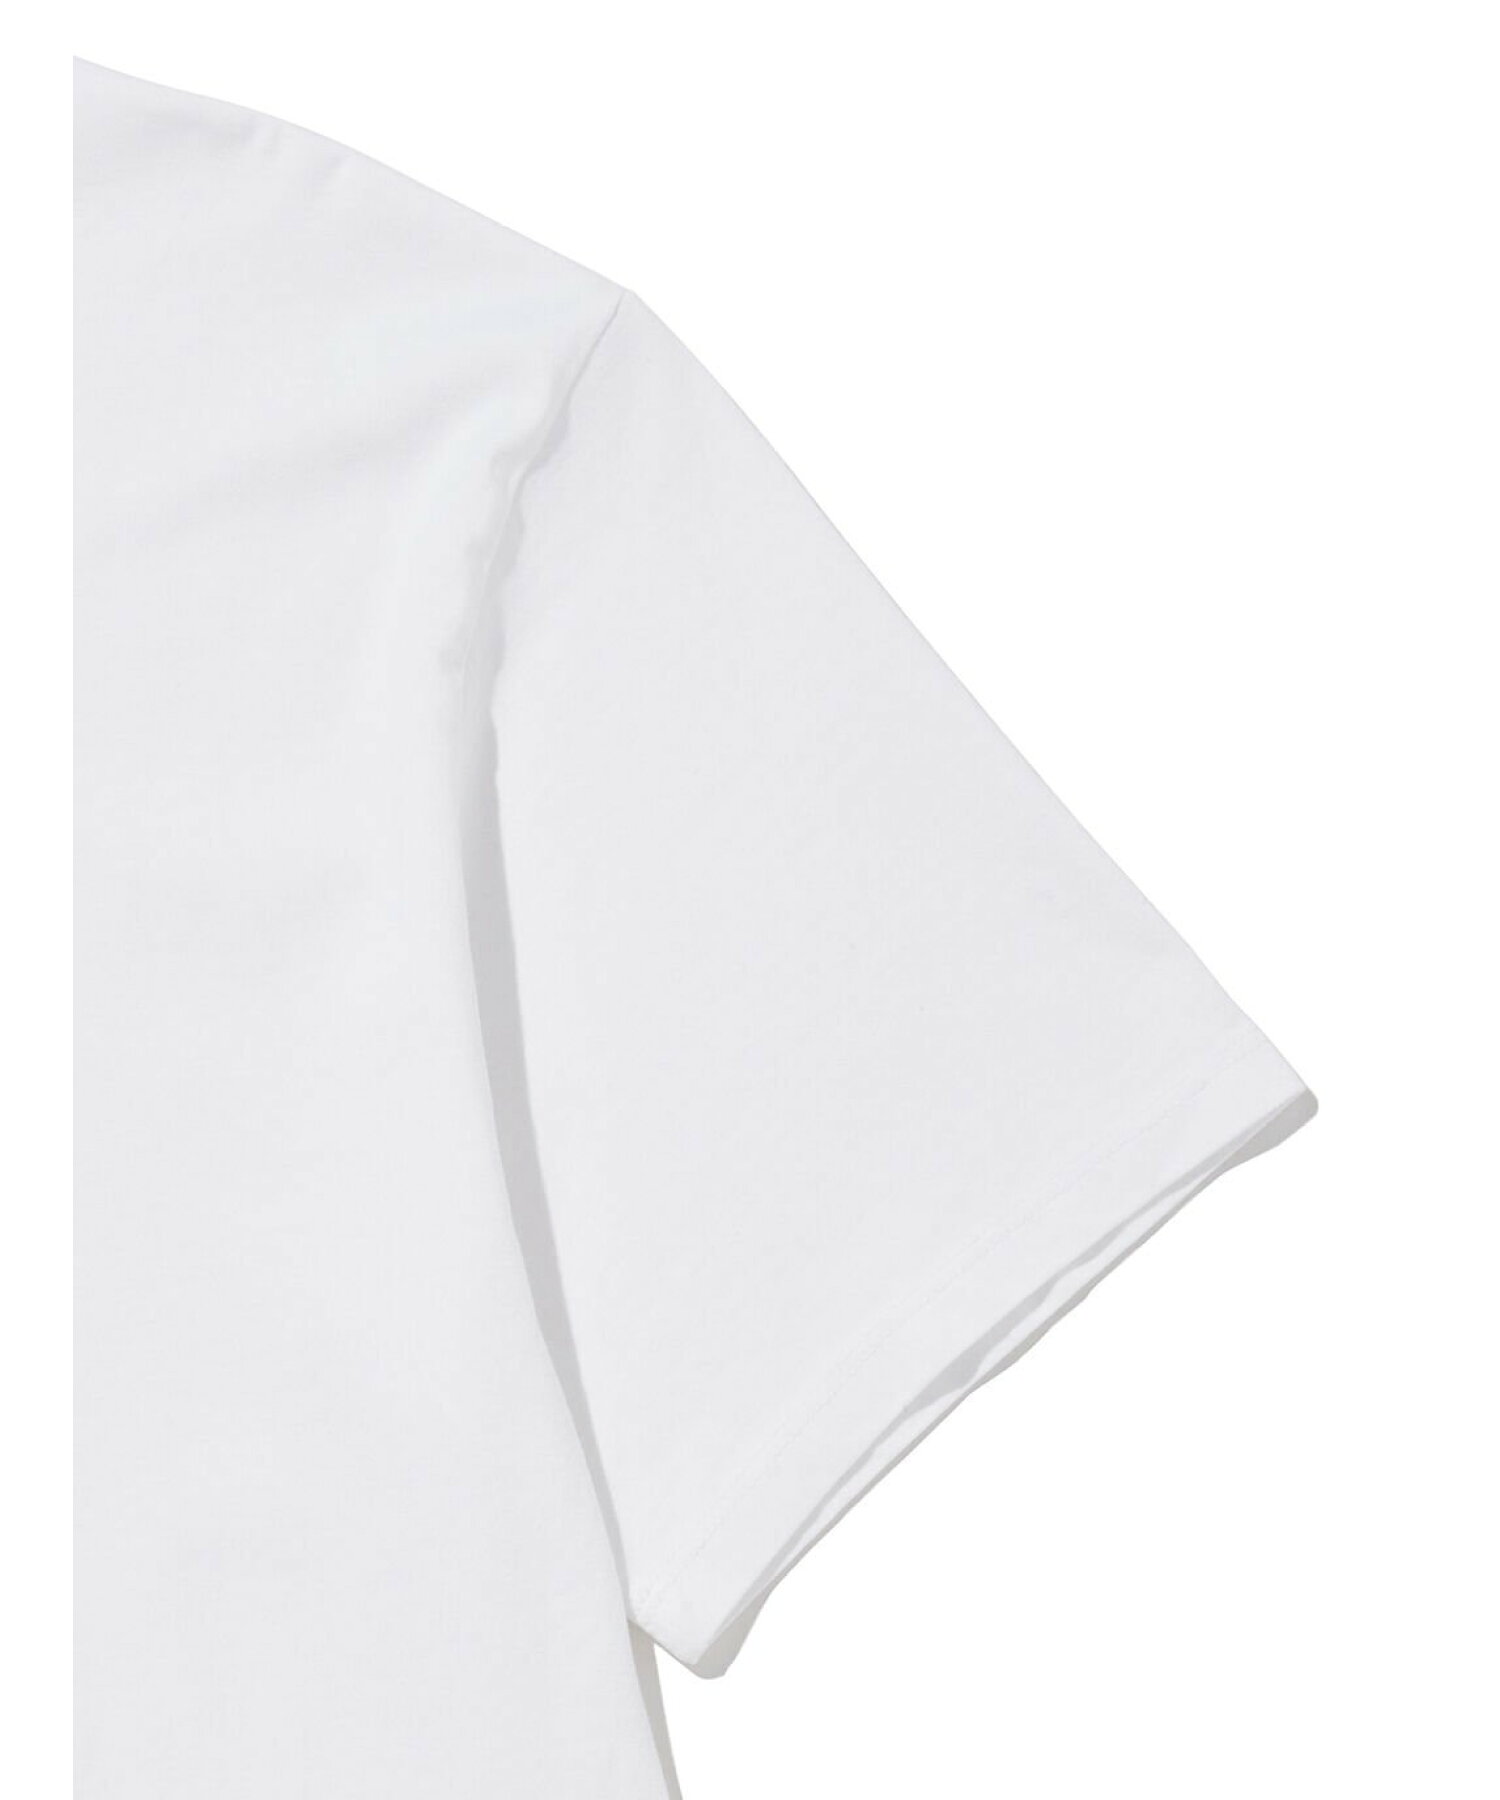 GOLD TABTM Tシャツ ホワイト WHITE +